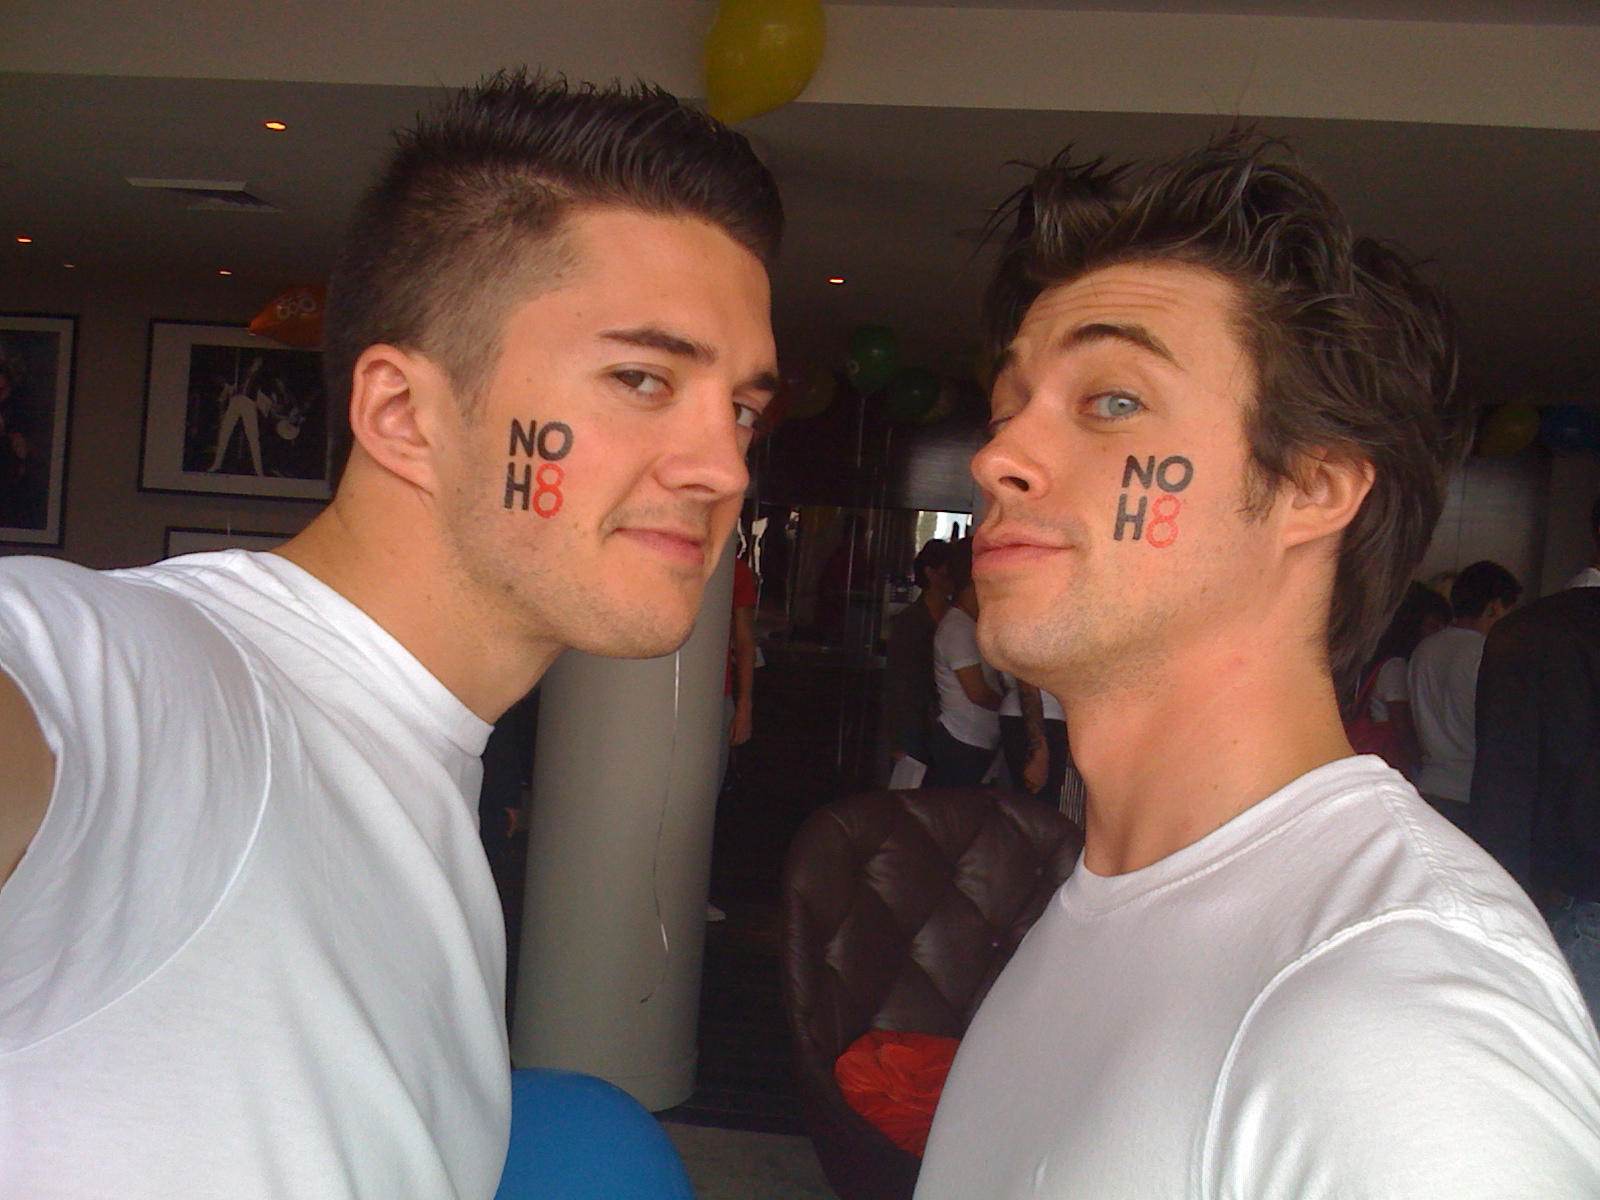 Matthew Smith and Blake Skjellerup at the 2010 LA Pride Photoshoot